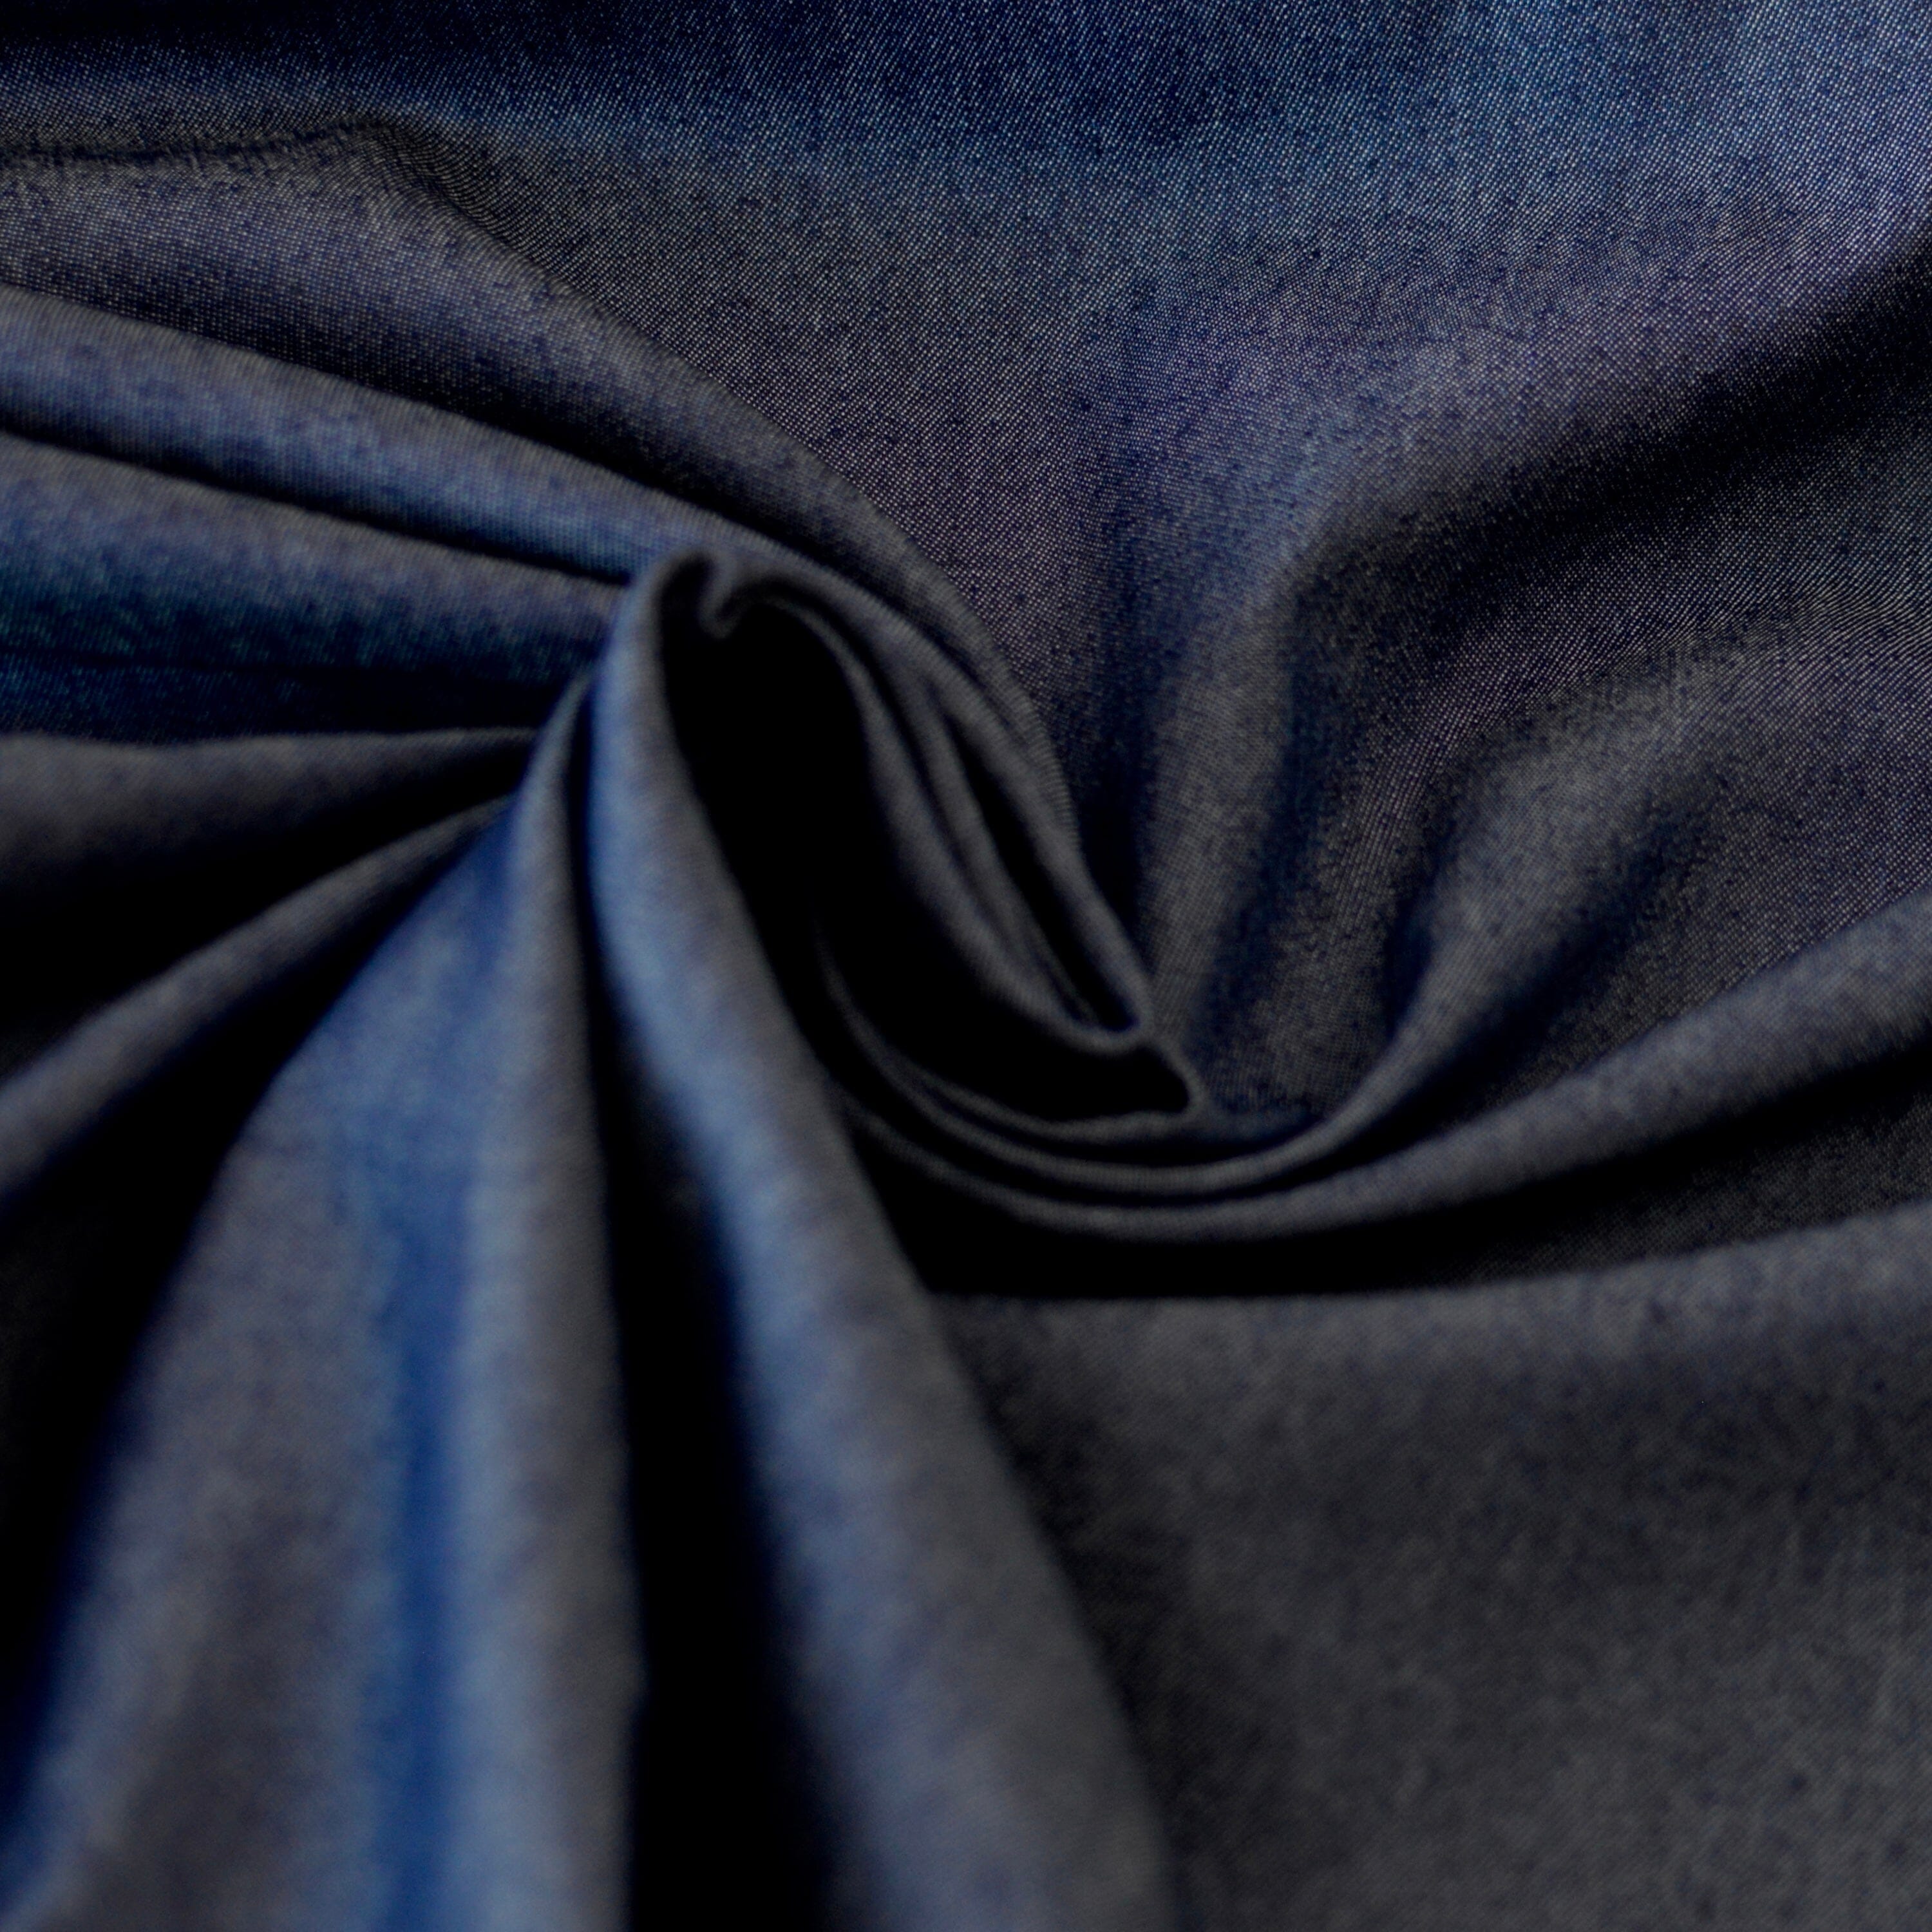 Chambray - Indigo jeansblau uni - Baumwollmix Webware Fabric poshpinks